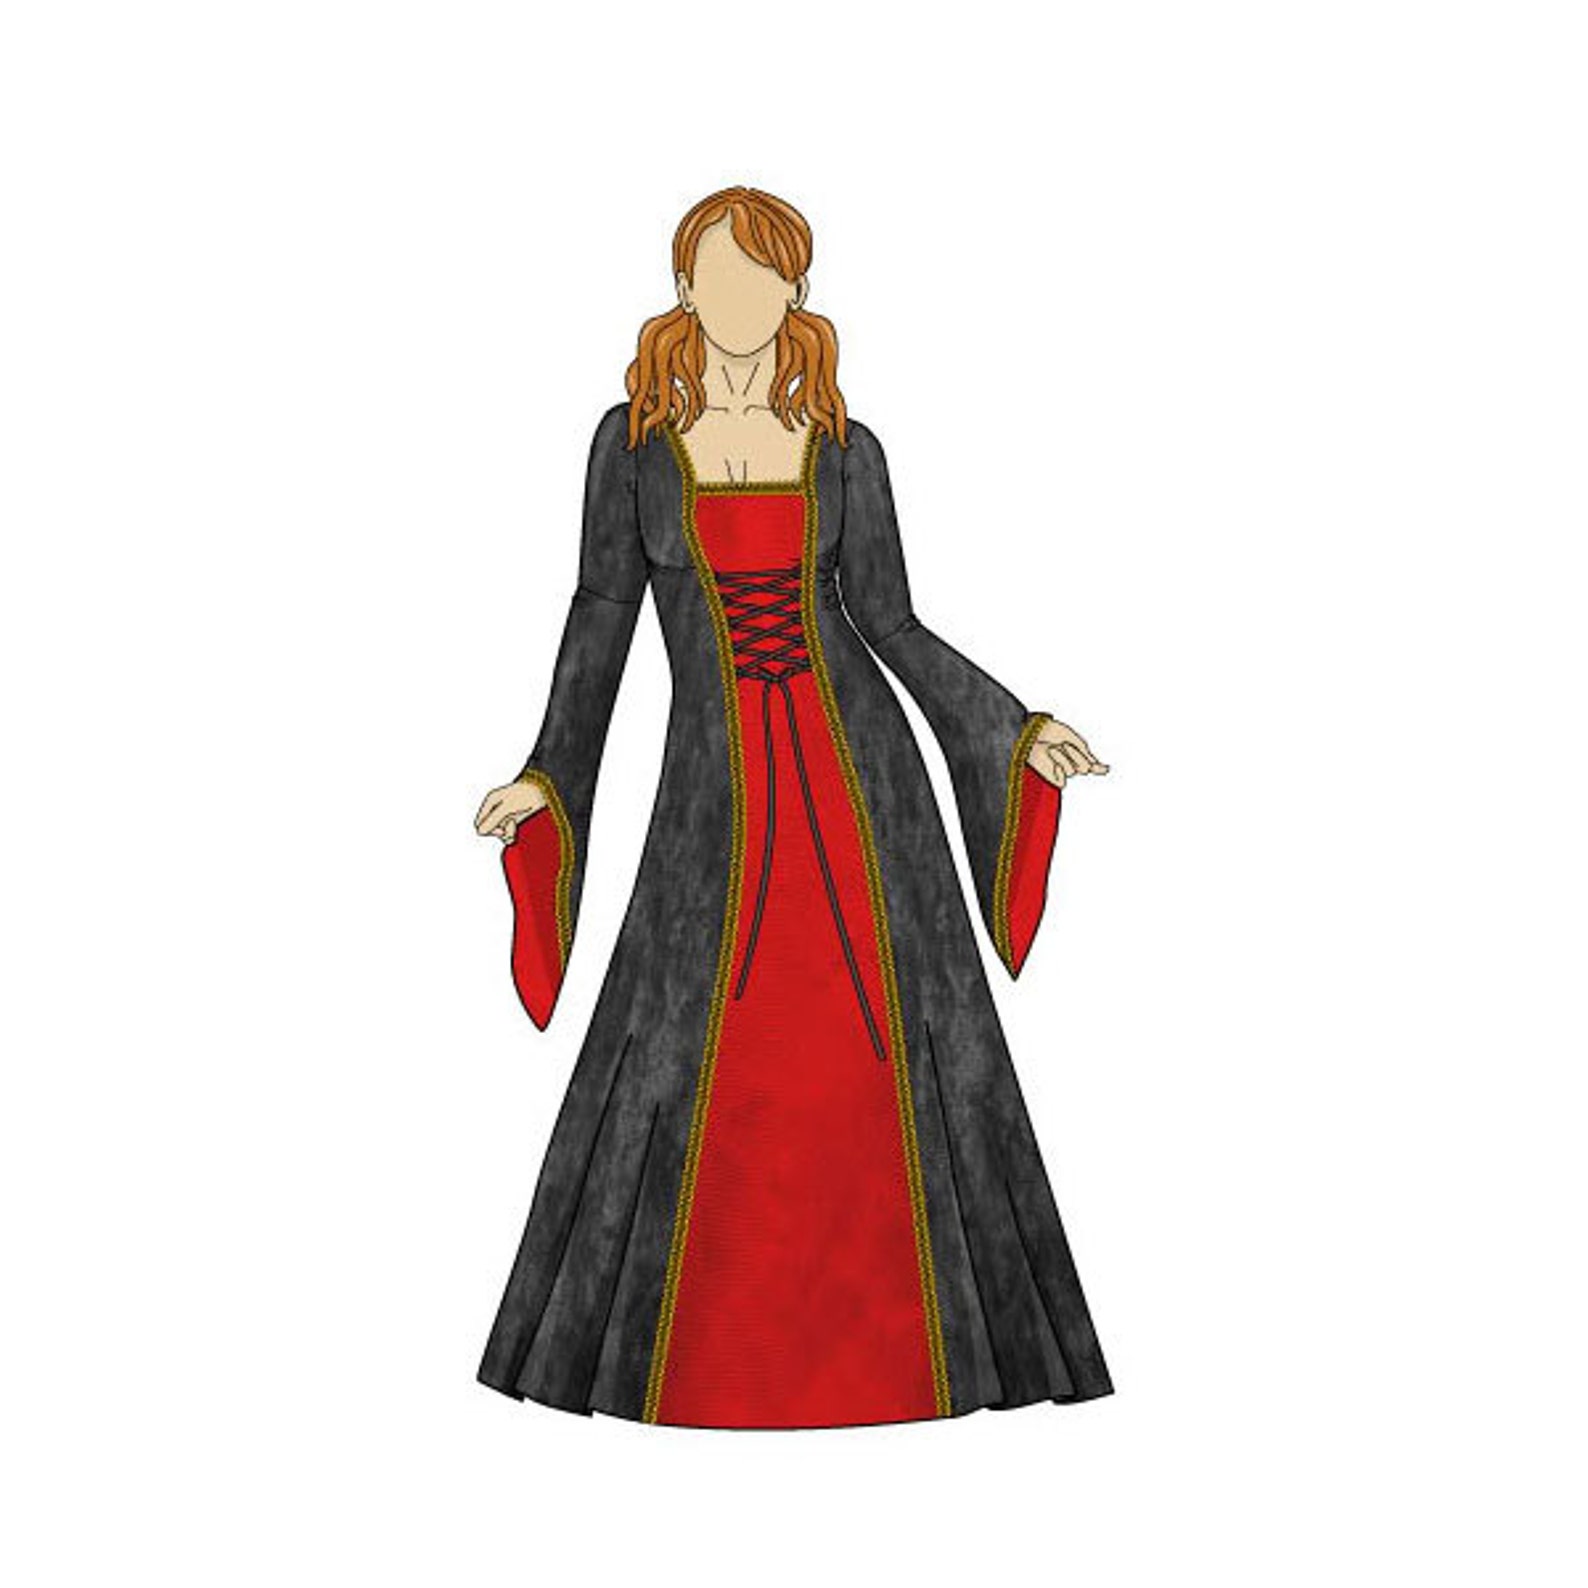 Robe est. Средневековые платья швеи. Средневековое платье шаблон. Средневековое платье с фартуком. Средневековое платье на белом фоне.